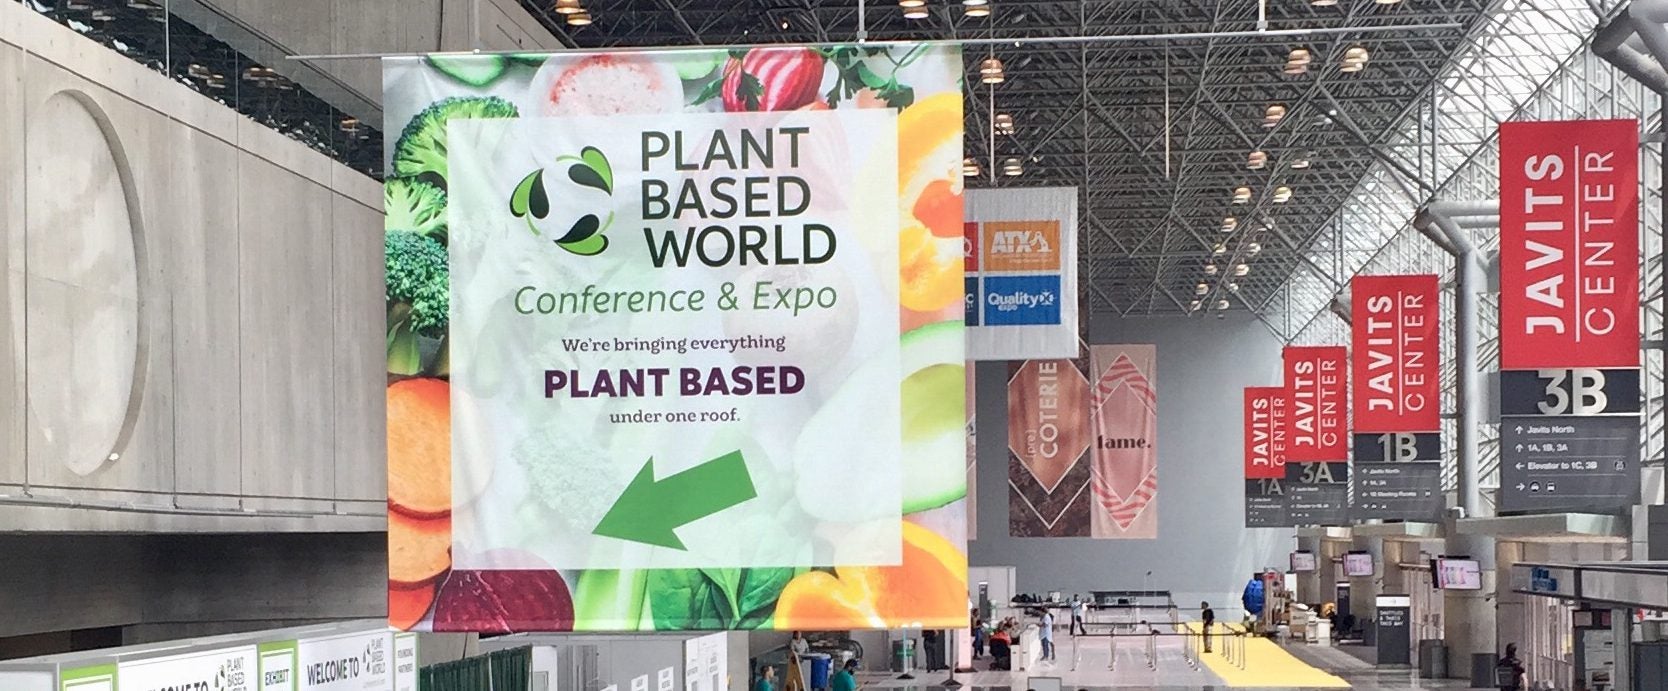 Plant Based World Banner